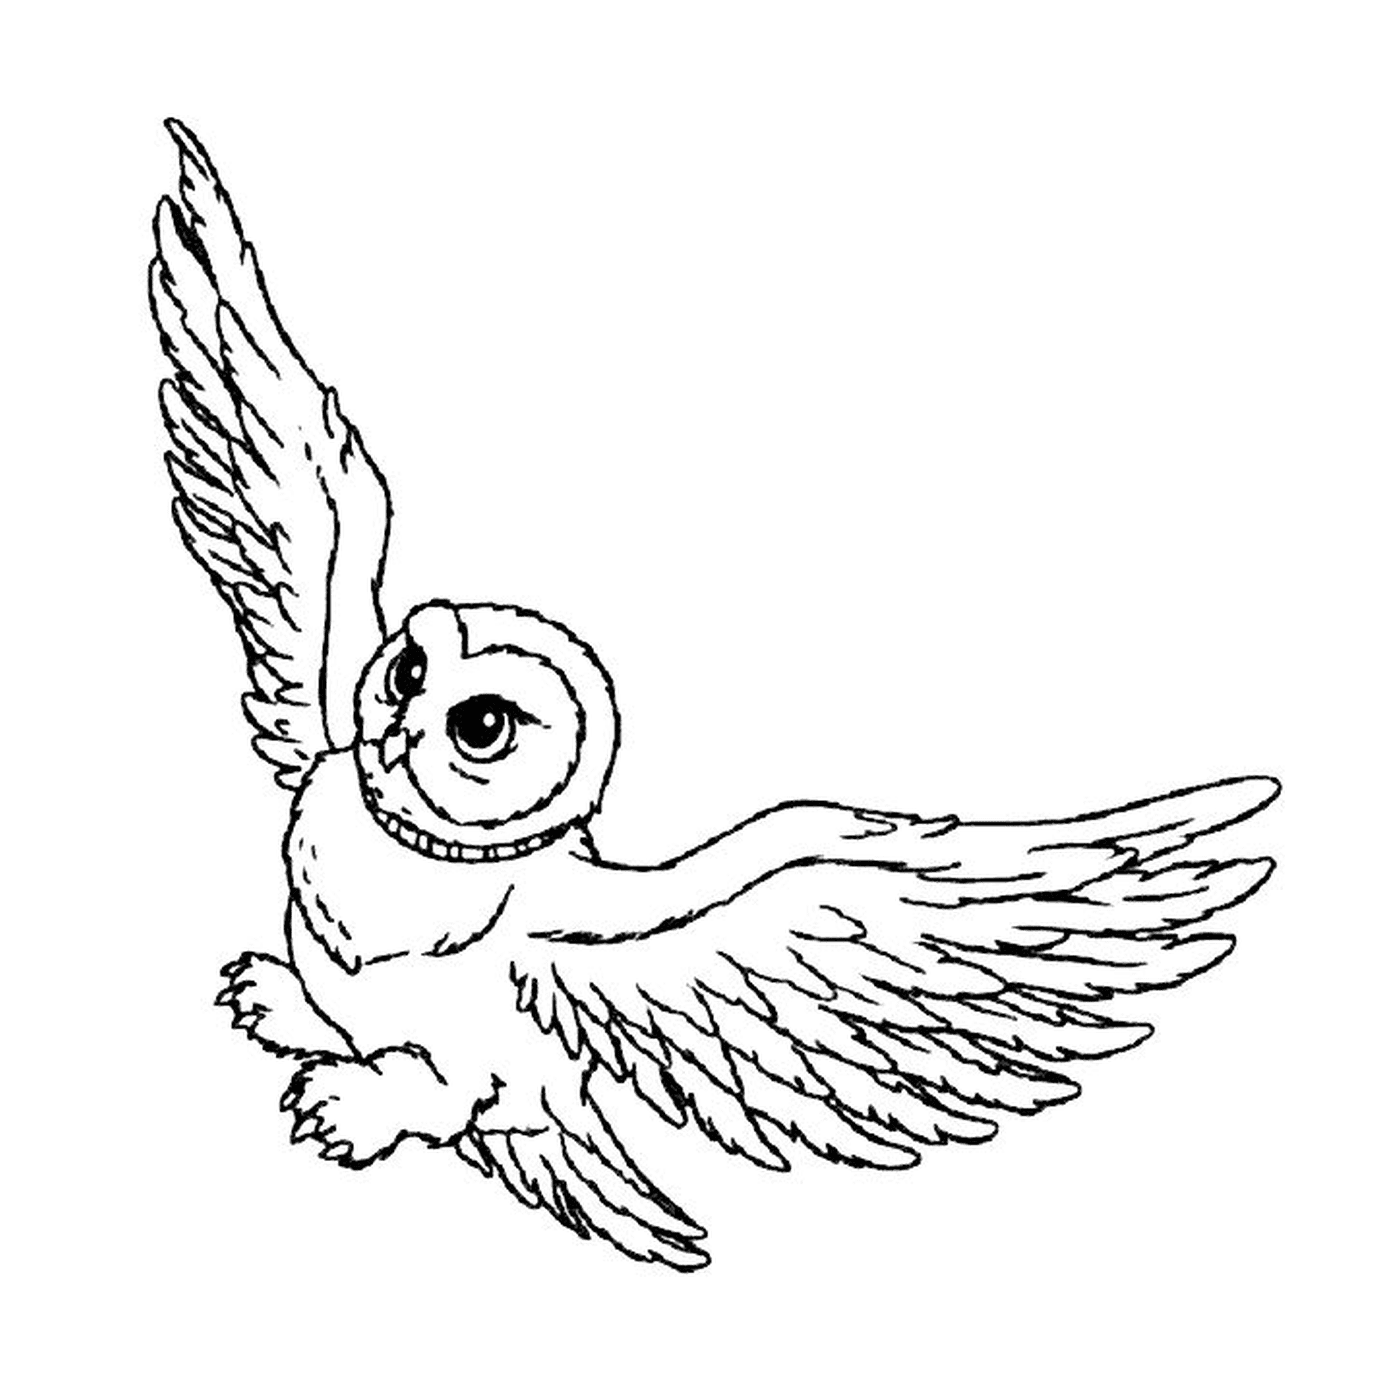  Hedwige voa no céu 